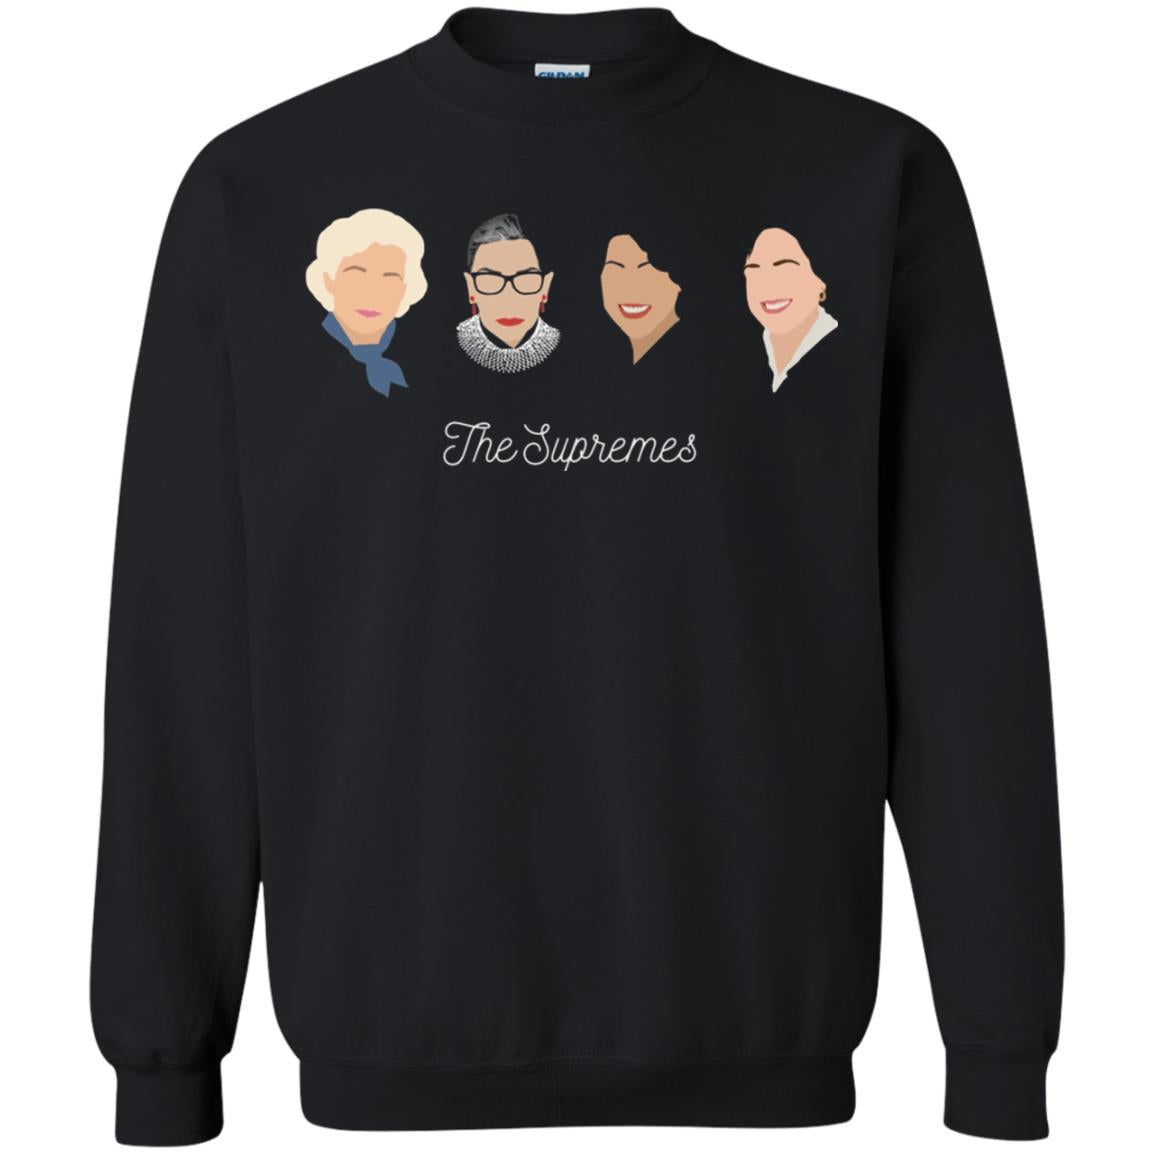 The Supremes T-shirt